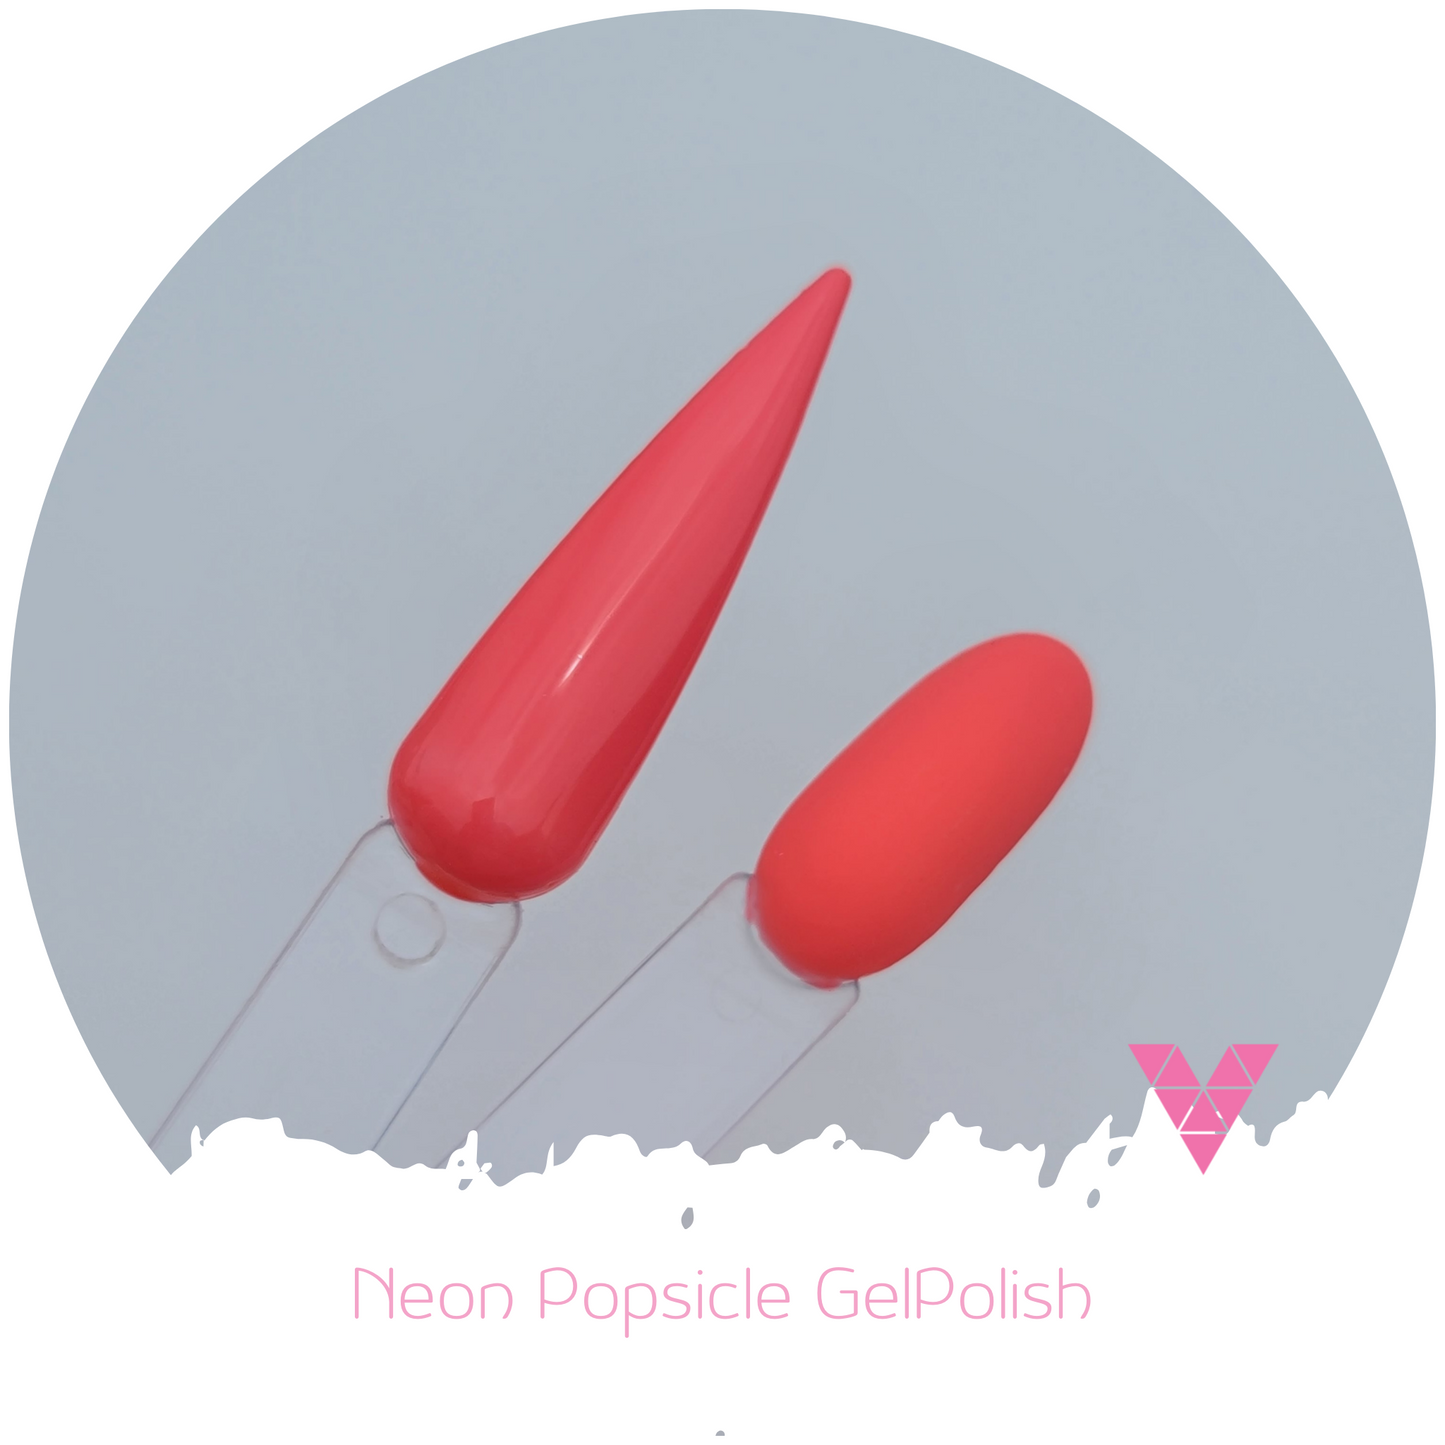 Neon Popsicle GelPolish